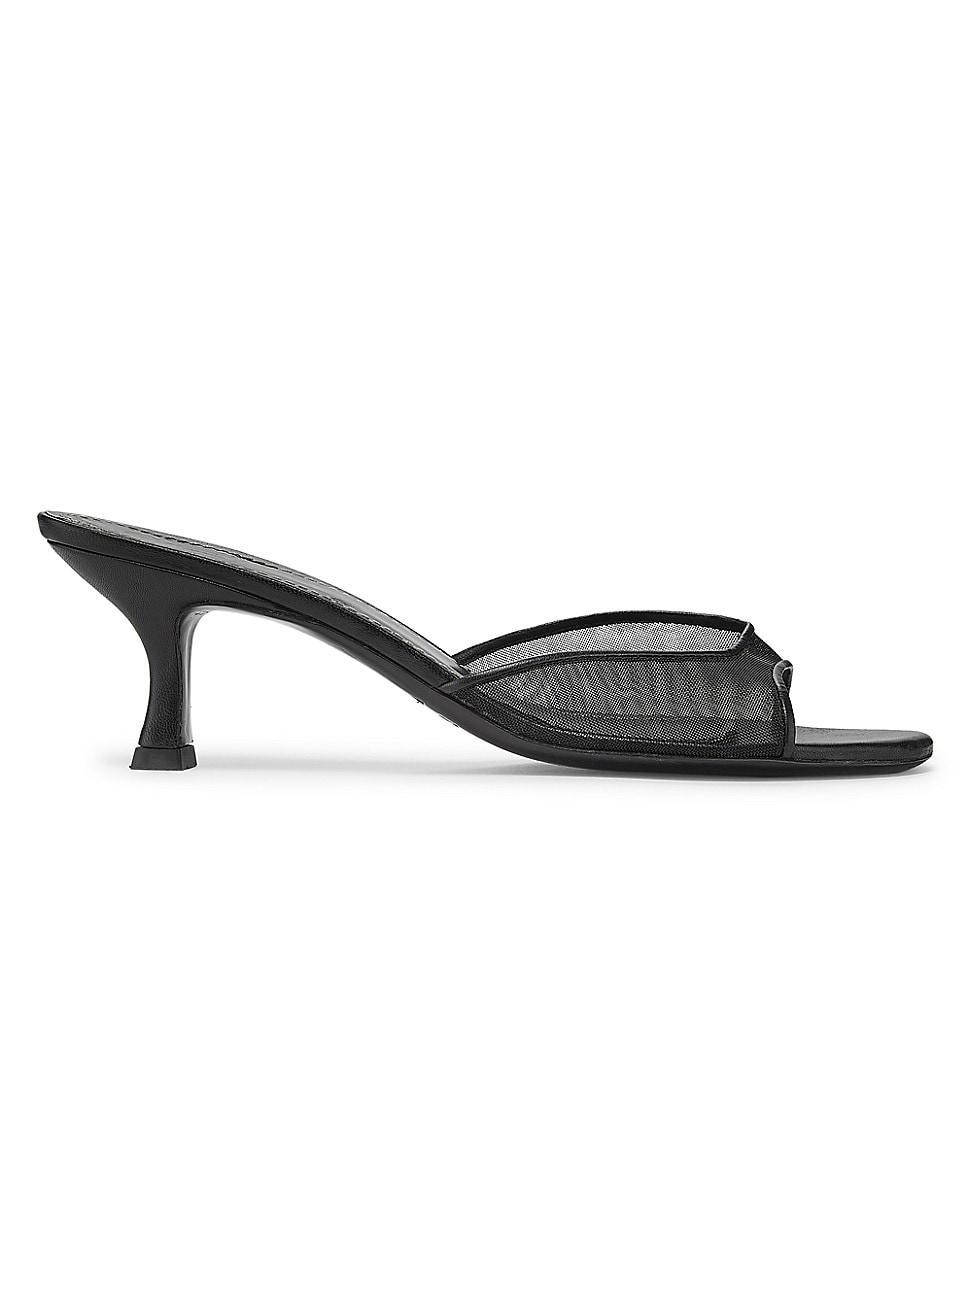 Staud Womens Brigitte Mesh Mid Heel Sandals Product Image